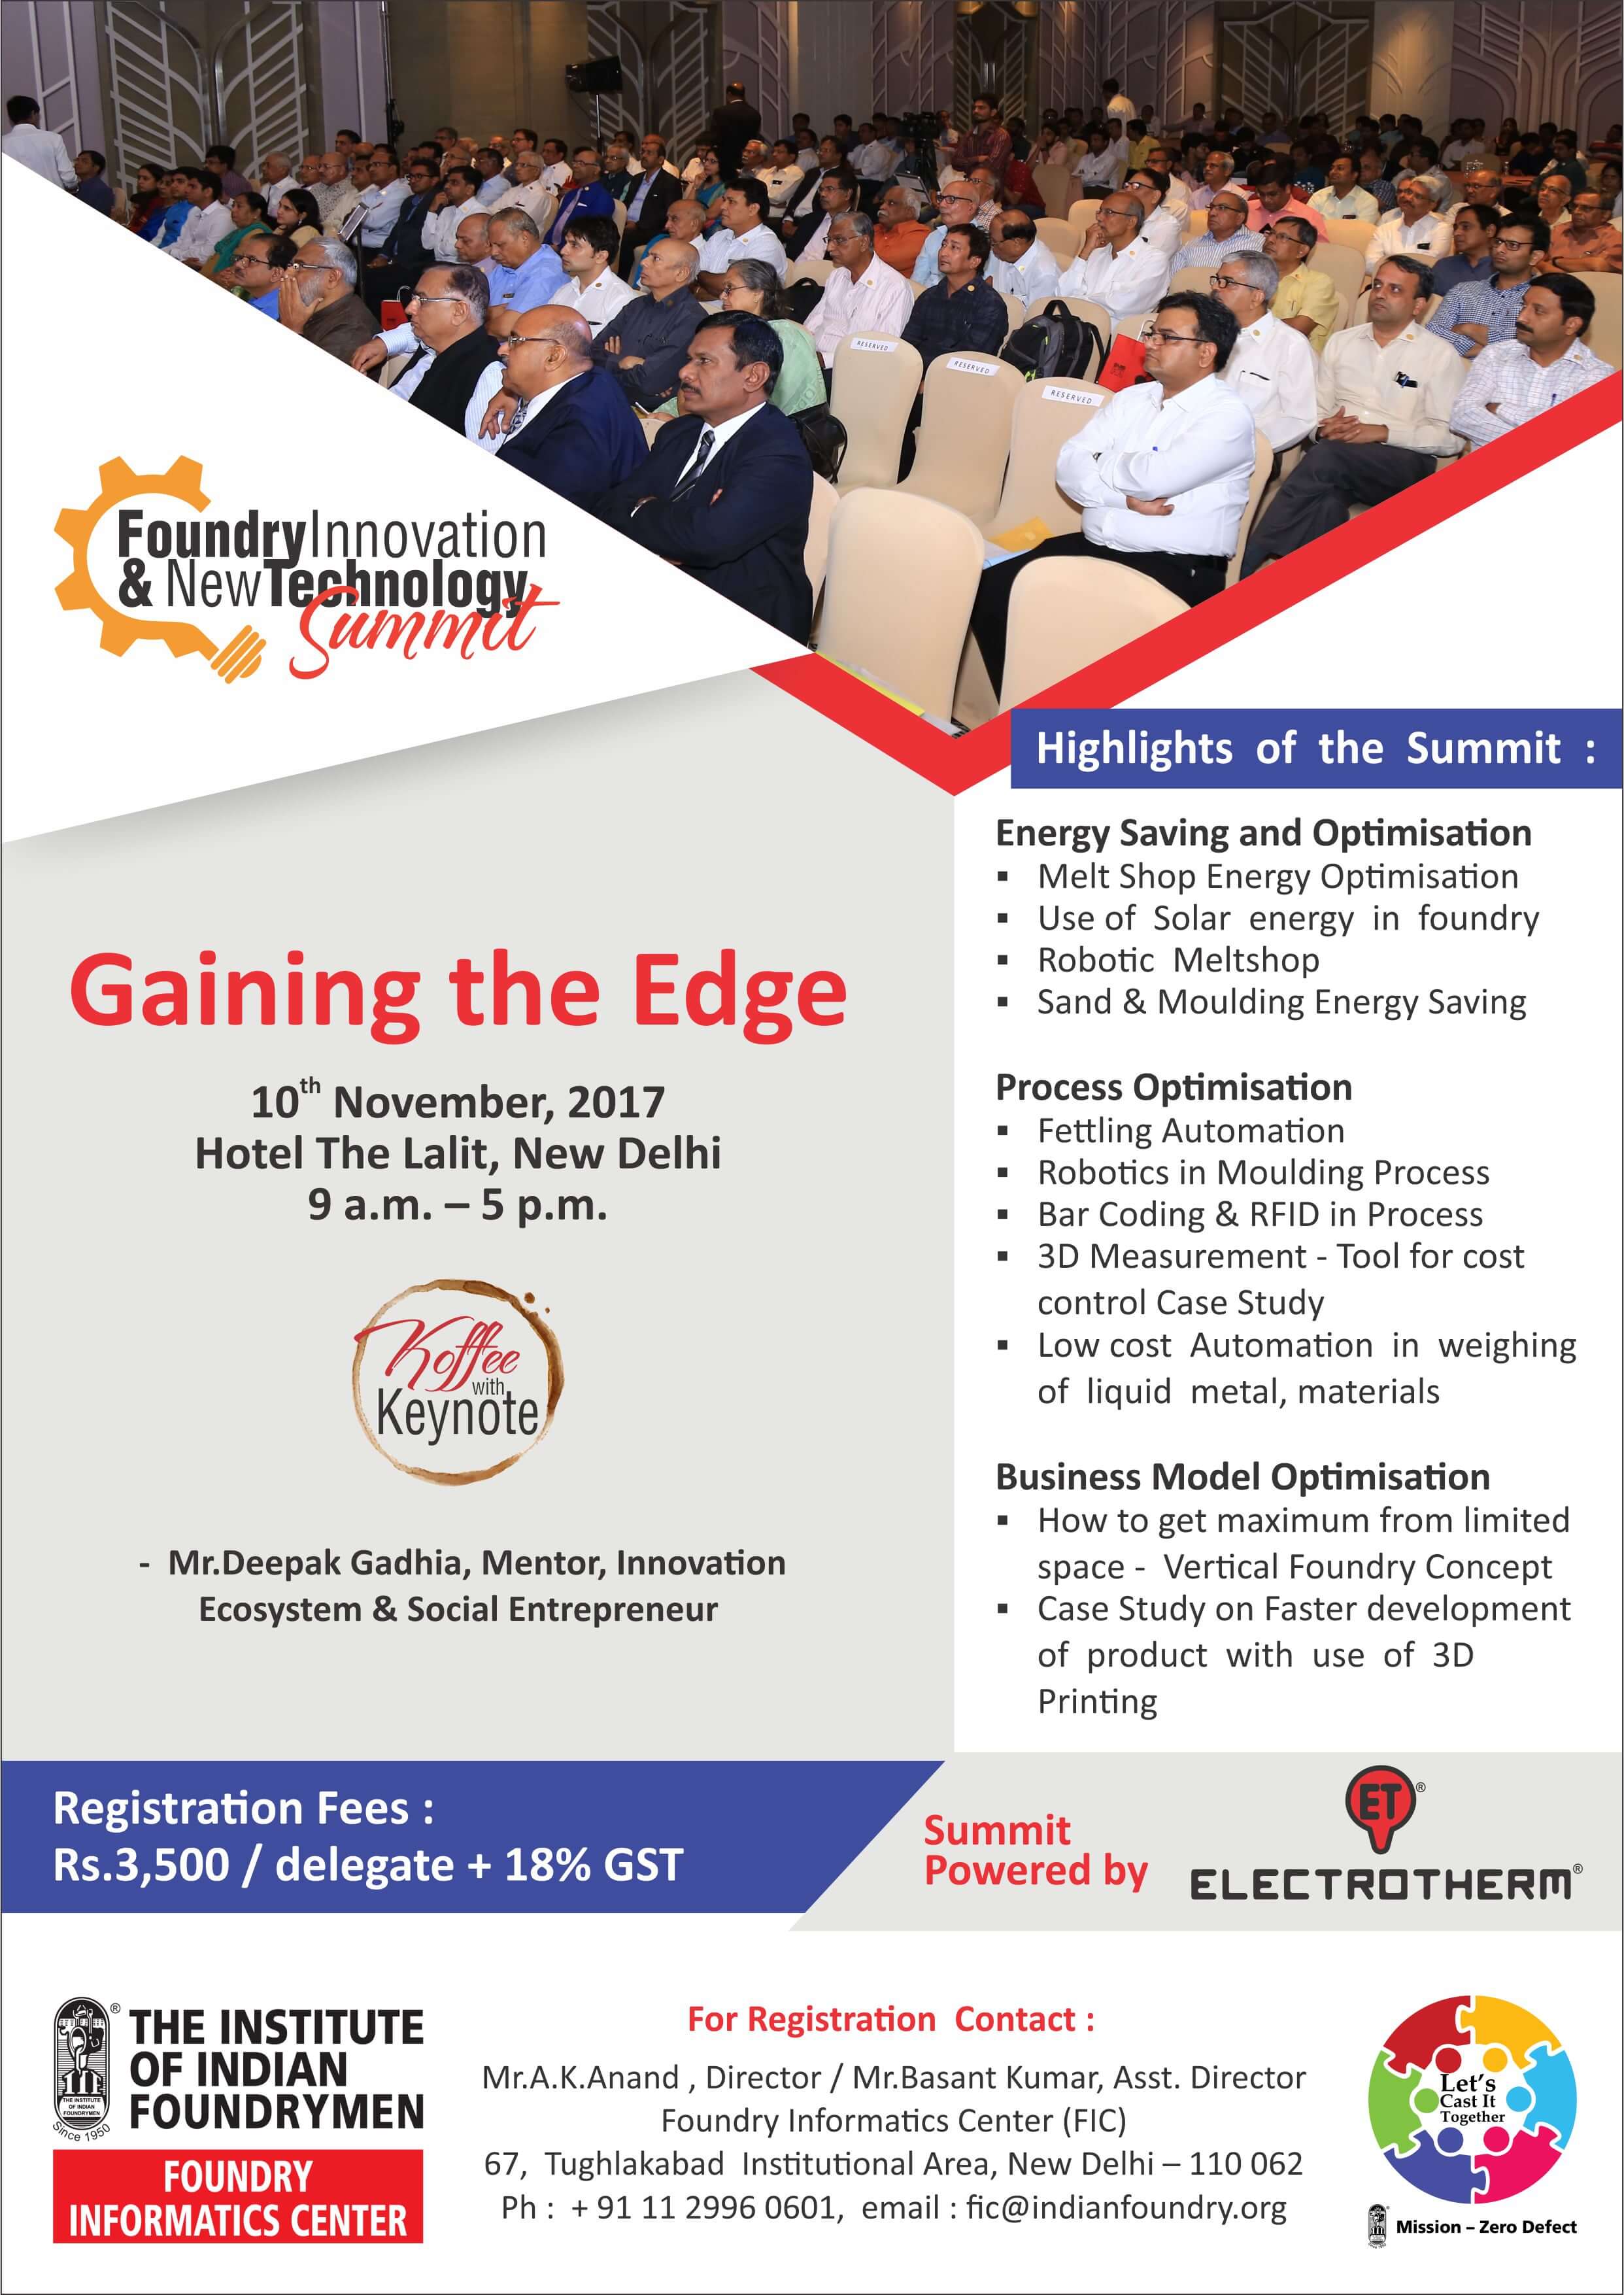 IIF Foundry Innovation & New Technology Summit, 10th Nov. 2017 New Delhi